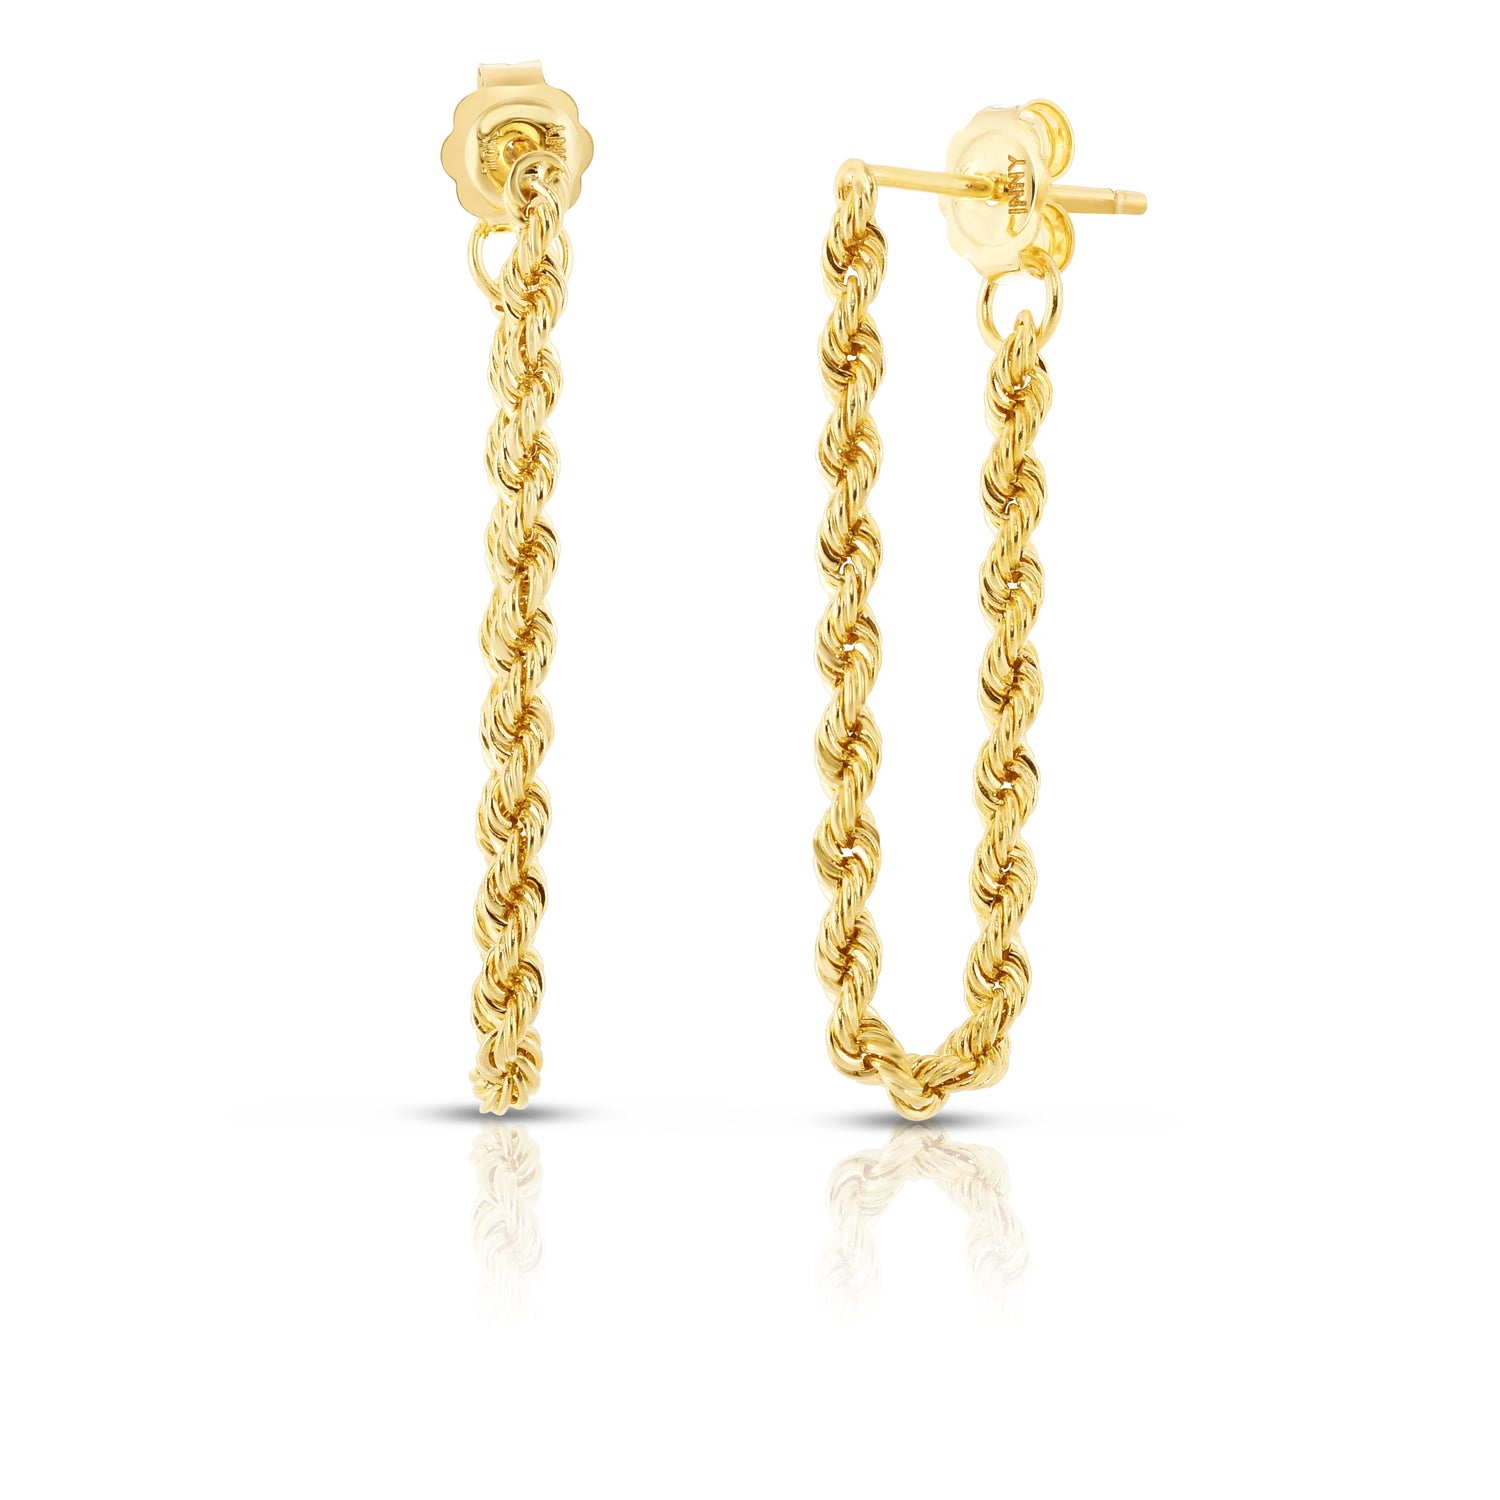 10k Yellow Gold 2.2mm Rope Chain Drop Earrings, Length: 1.2